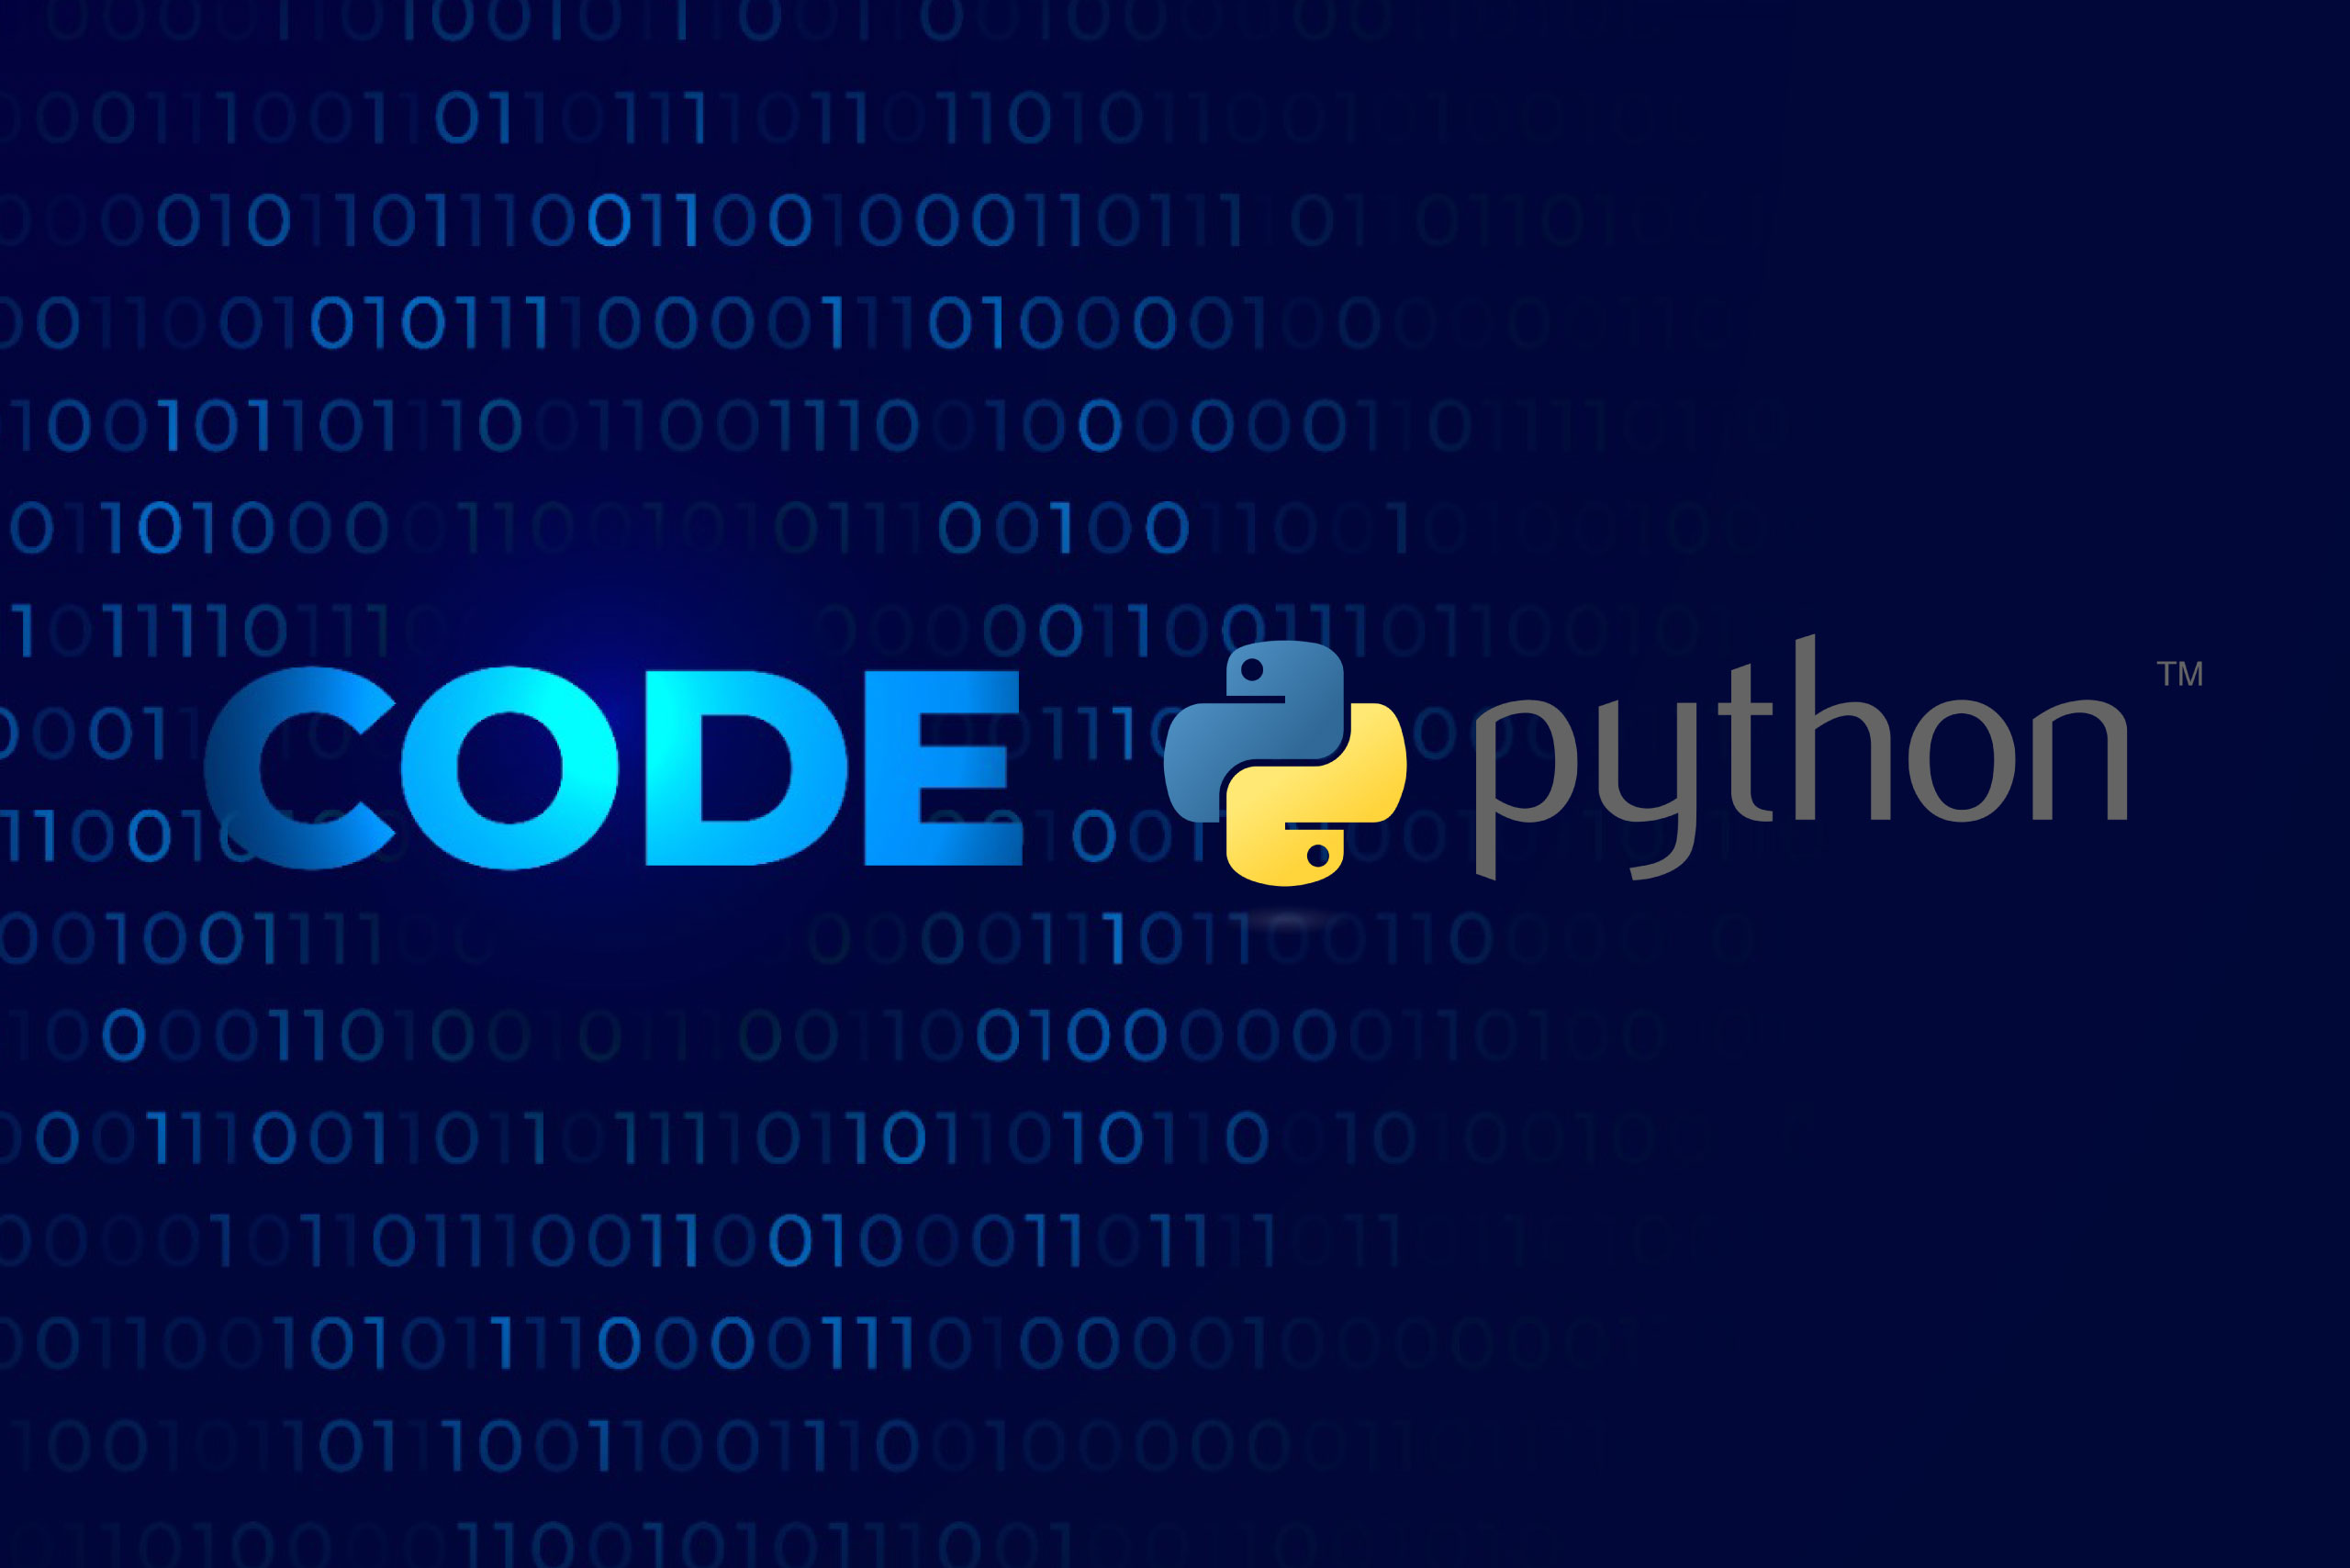 Core Python Training Course